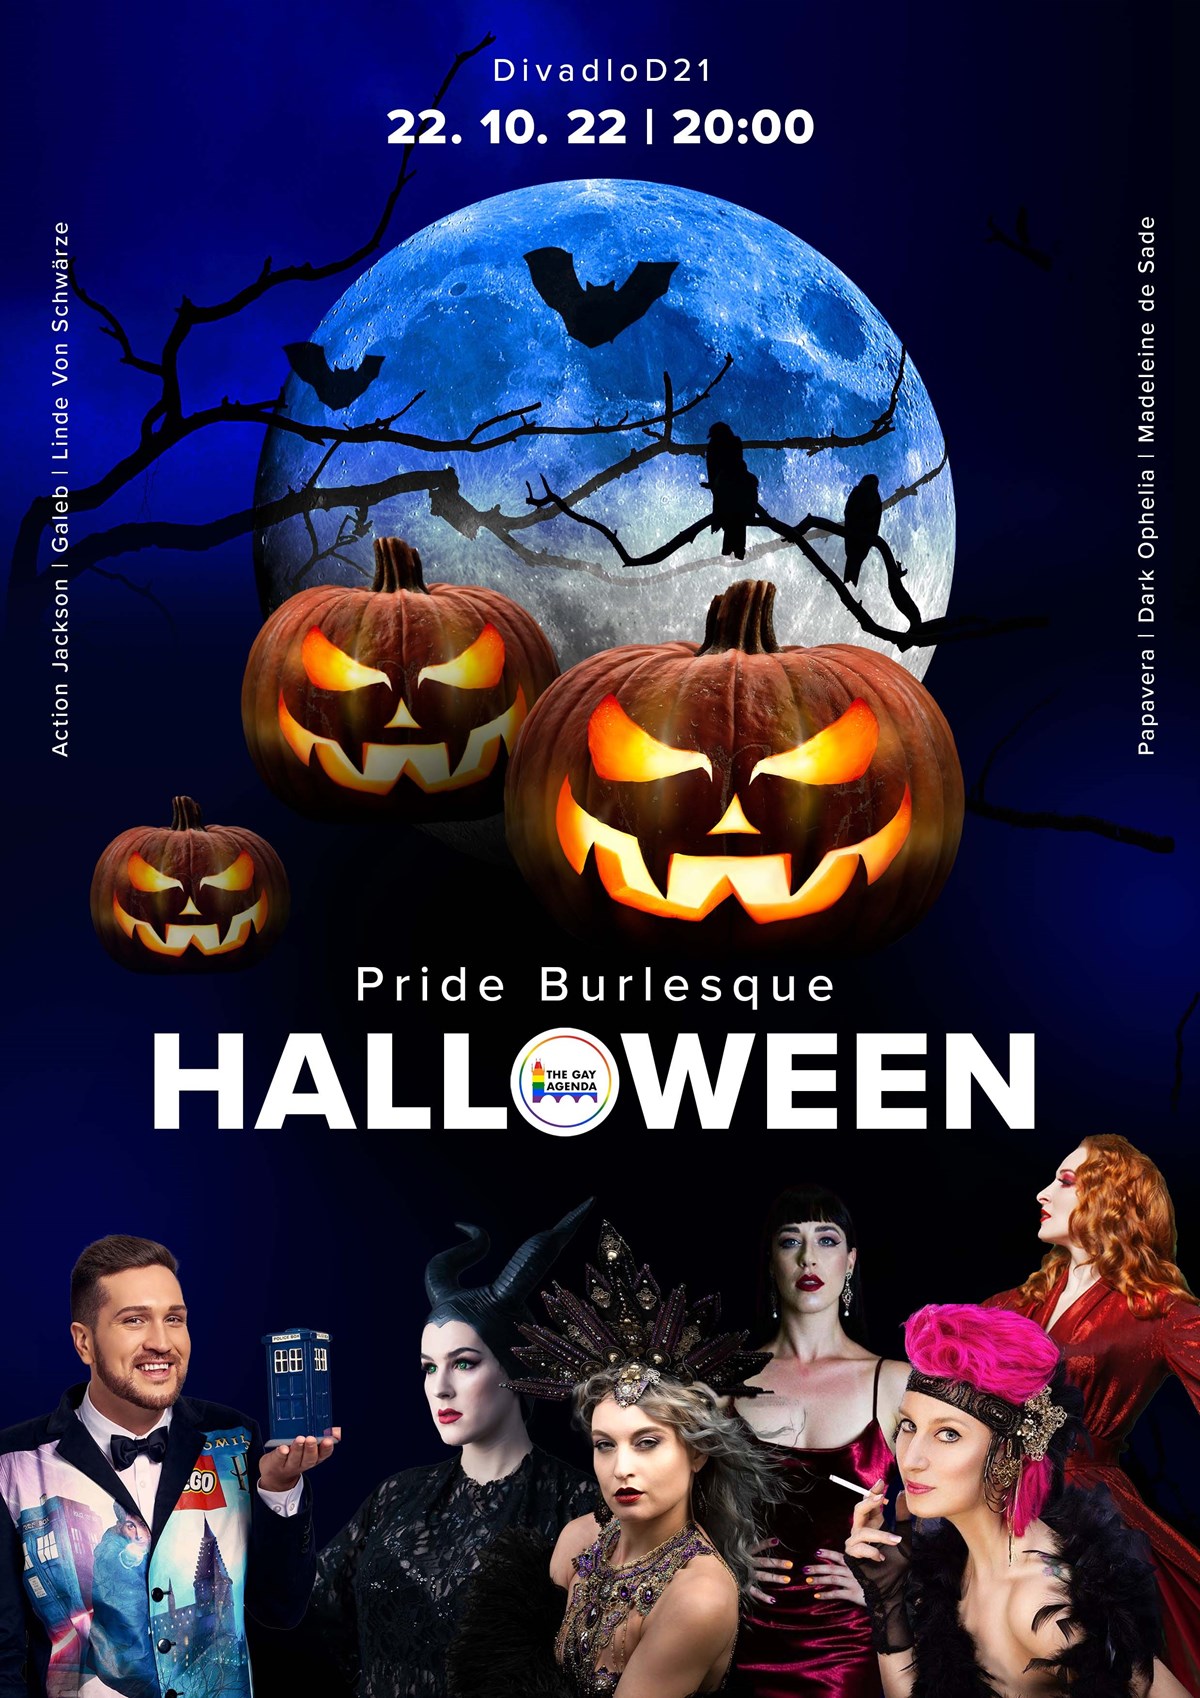 Pride Burlesque: Halloween- Divadlo D21 Praha -Divadlo D21